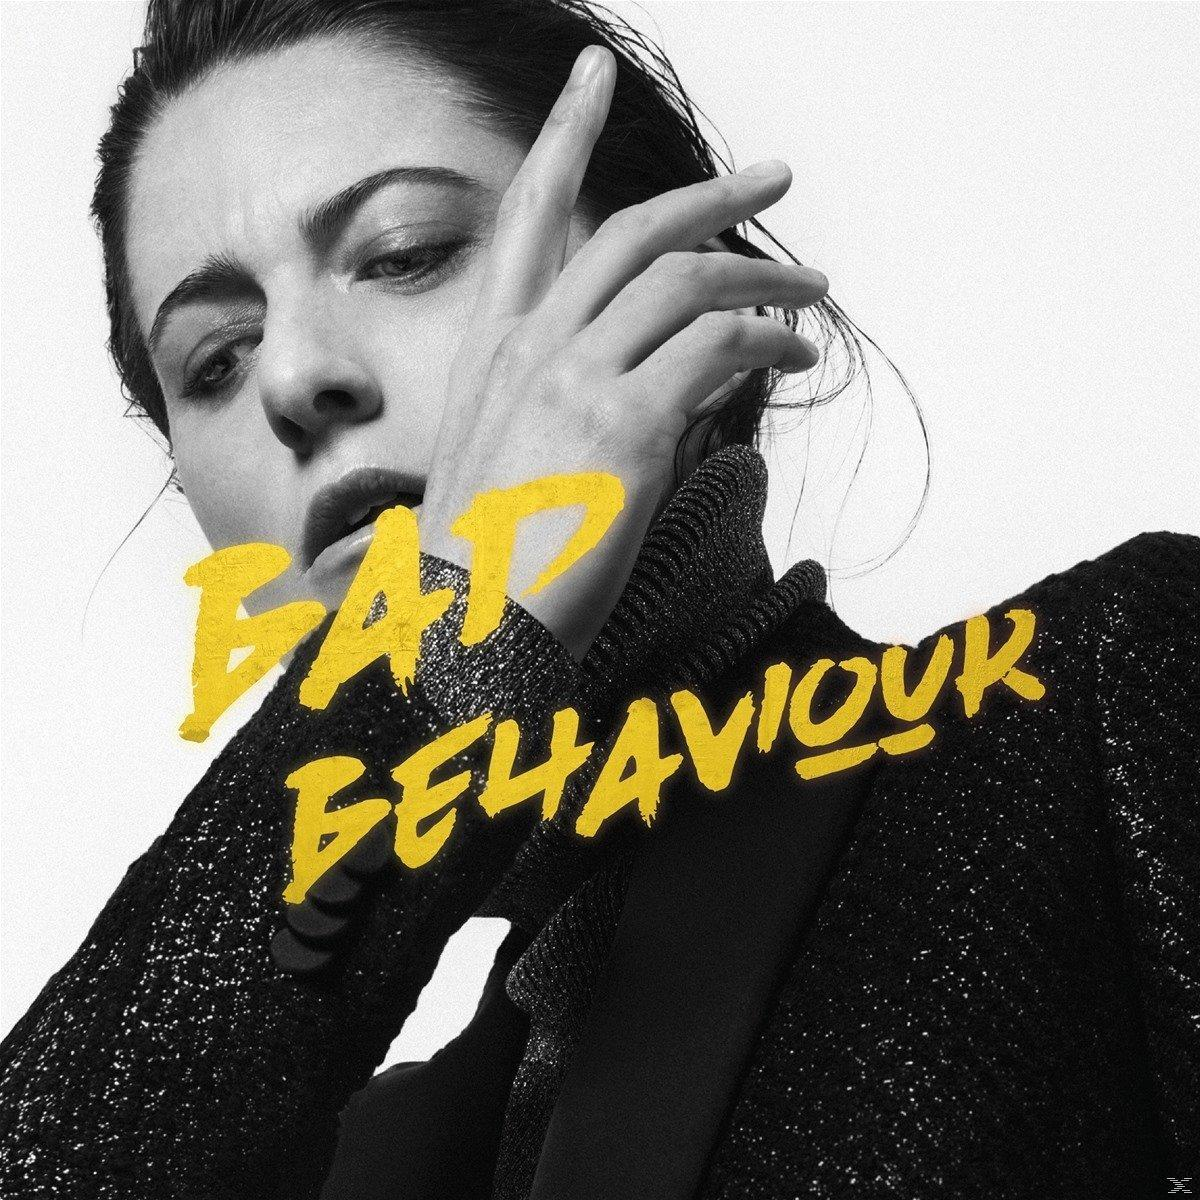 Kat Frankie - Bad Behaviour - Vinyl LP) (Transparent (Vinyl)